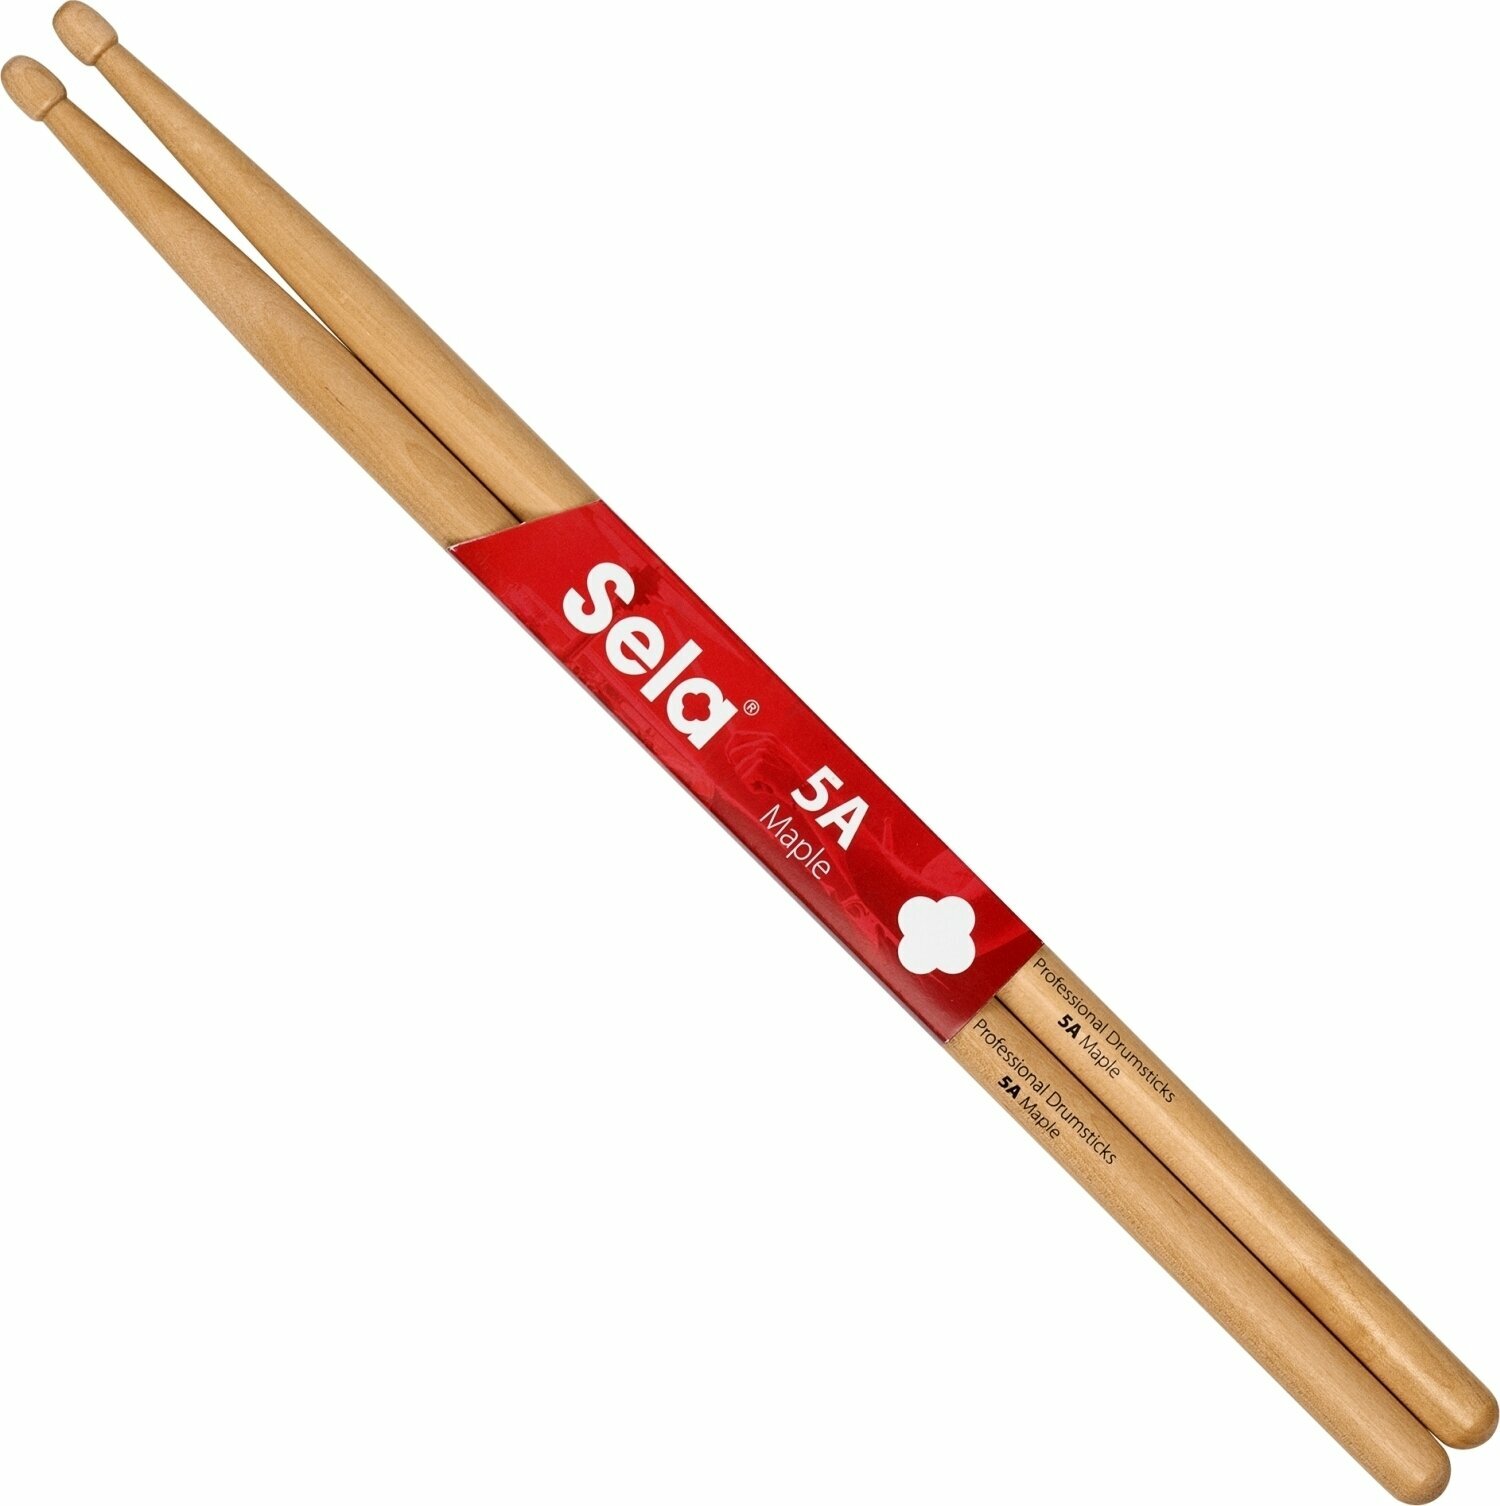 Bubnjarske palice Sela SE 271 Professional Drumsticks 5A - 6 Pair Bubnjarske palice